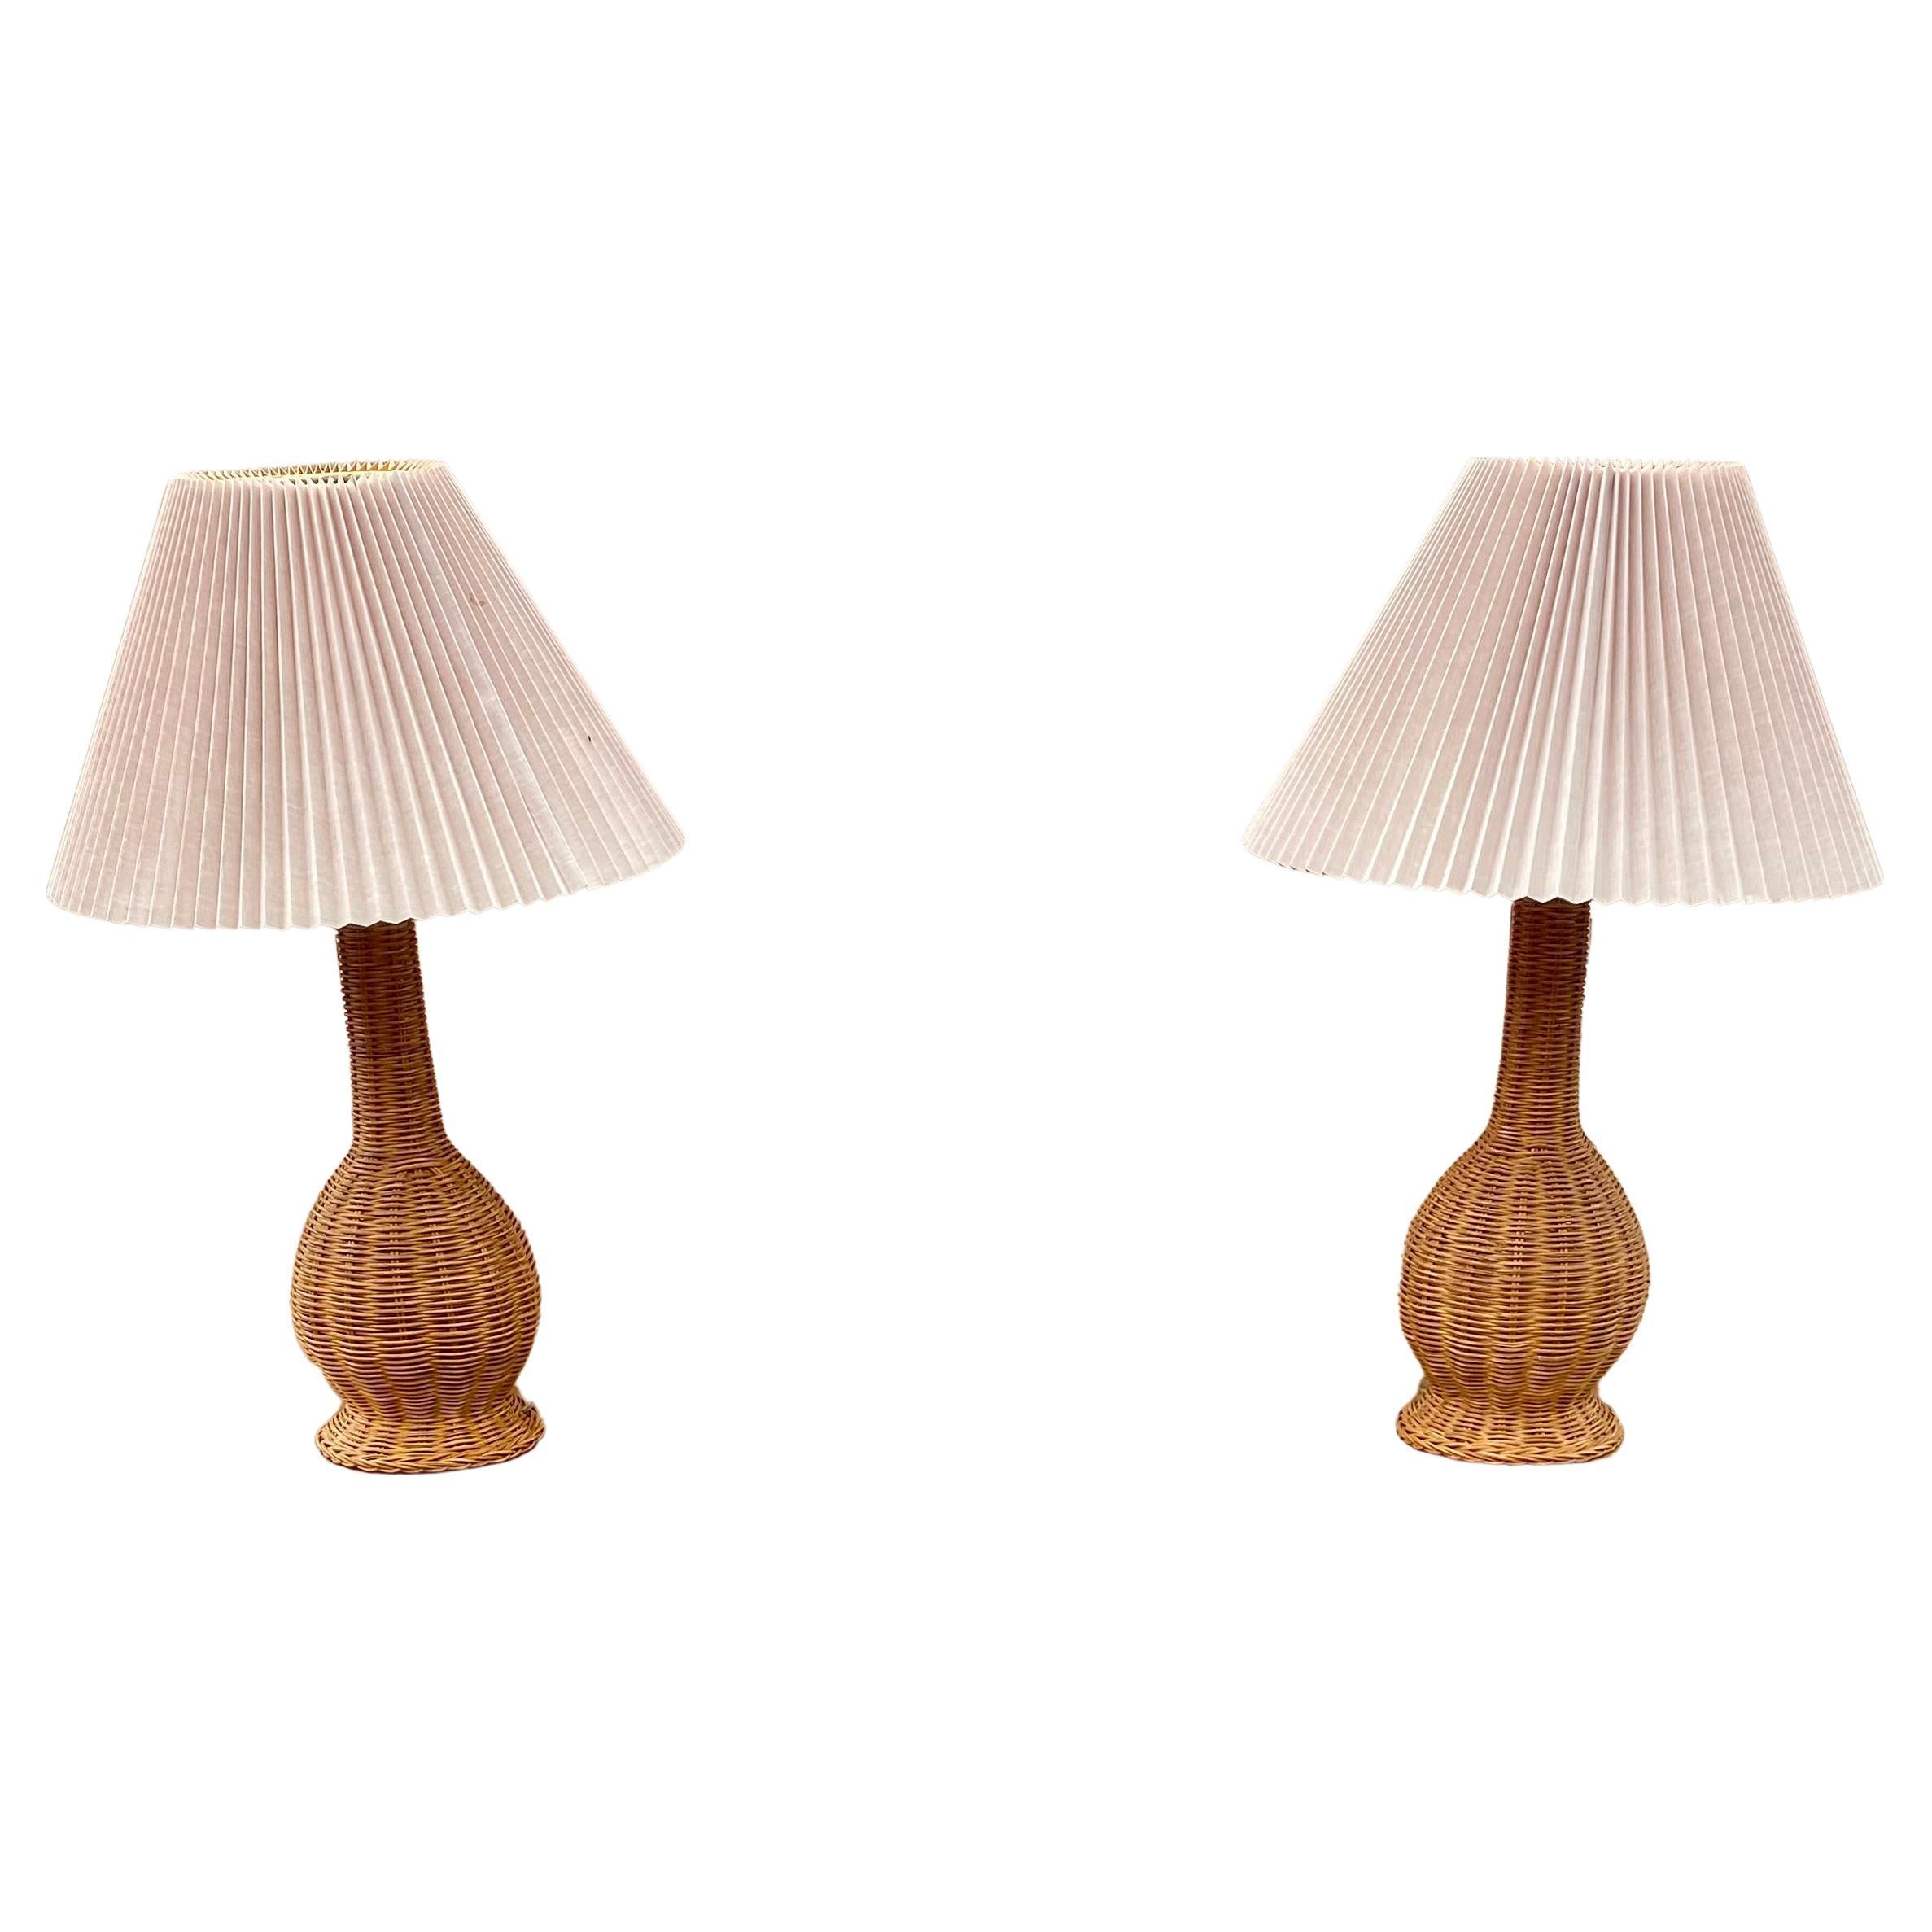 1970s Rattan Jar Wicker Table Lamps, Set of 2